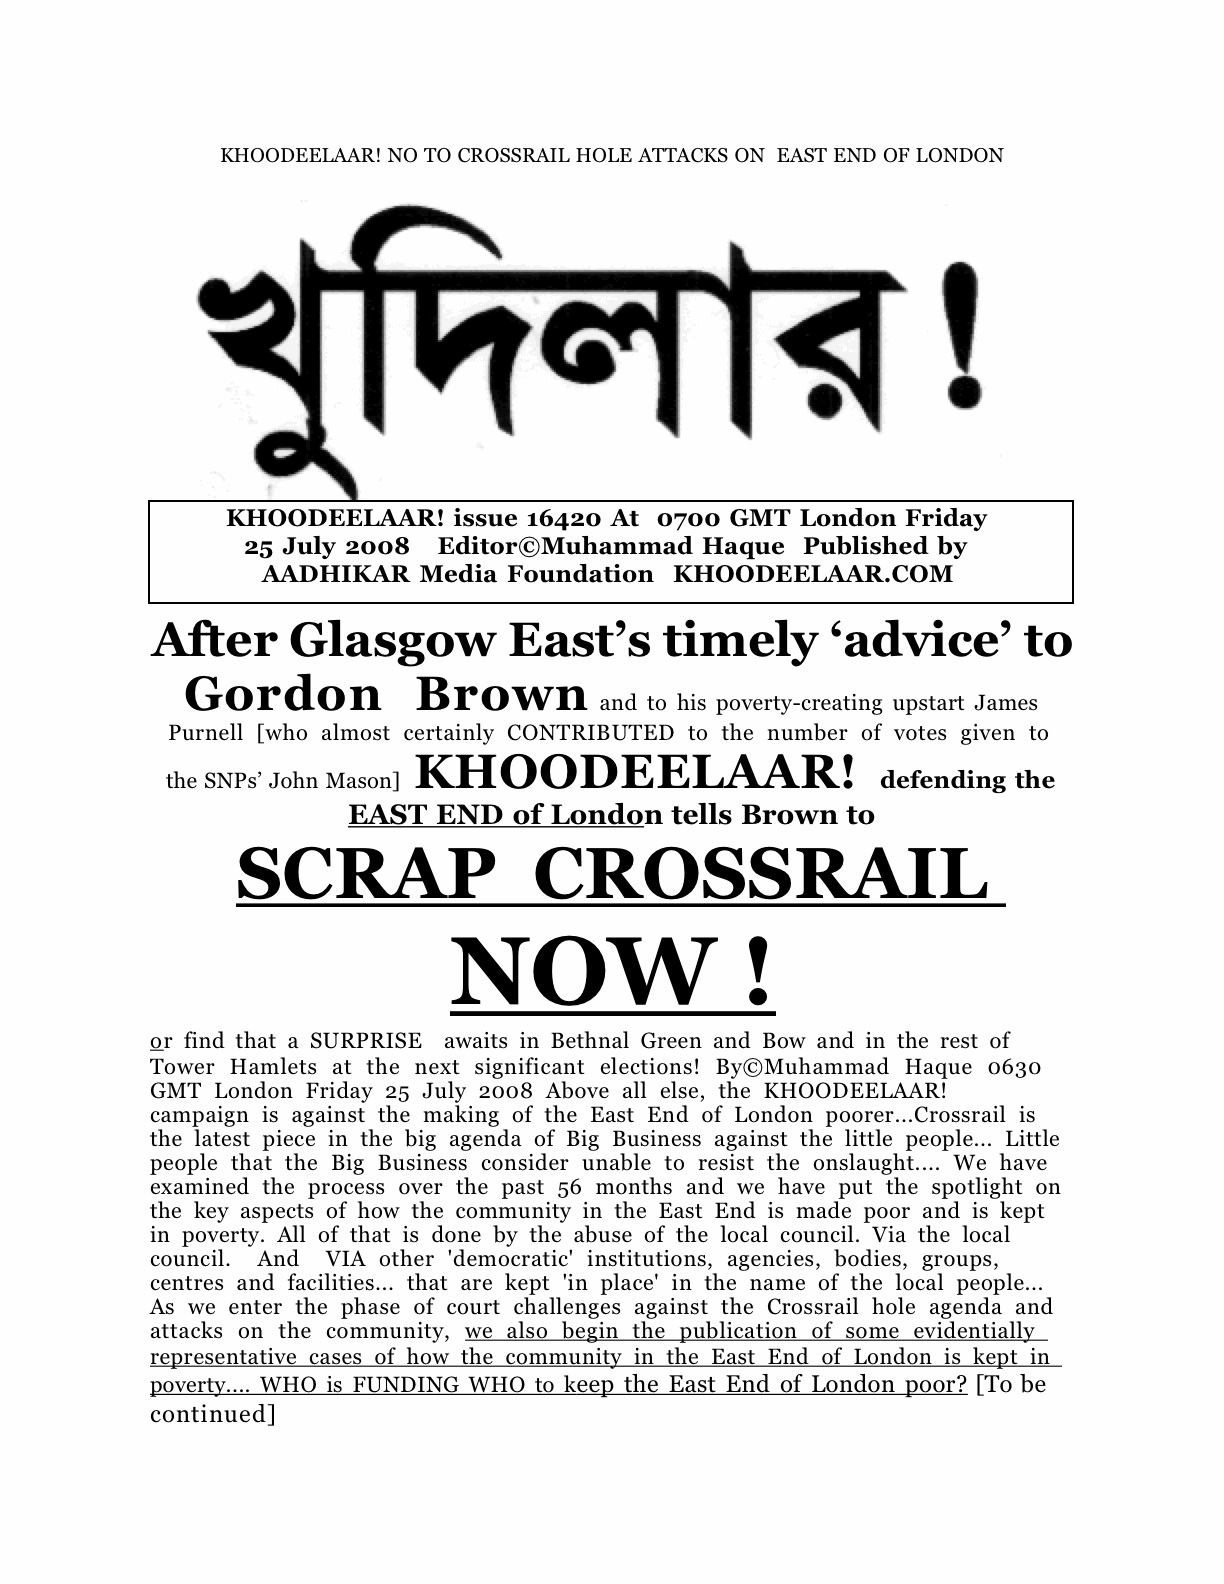 KHOODEELAAR! leaflet 16420 Friday 25 July 2008